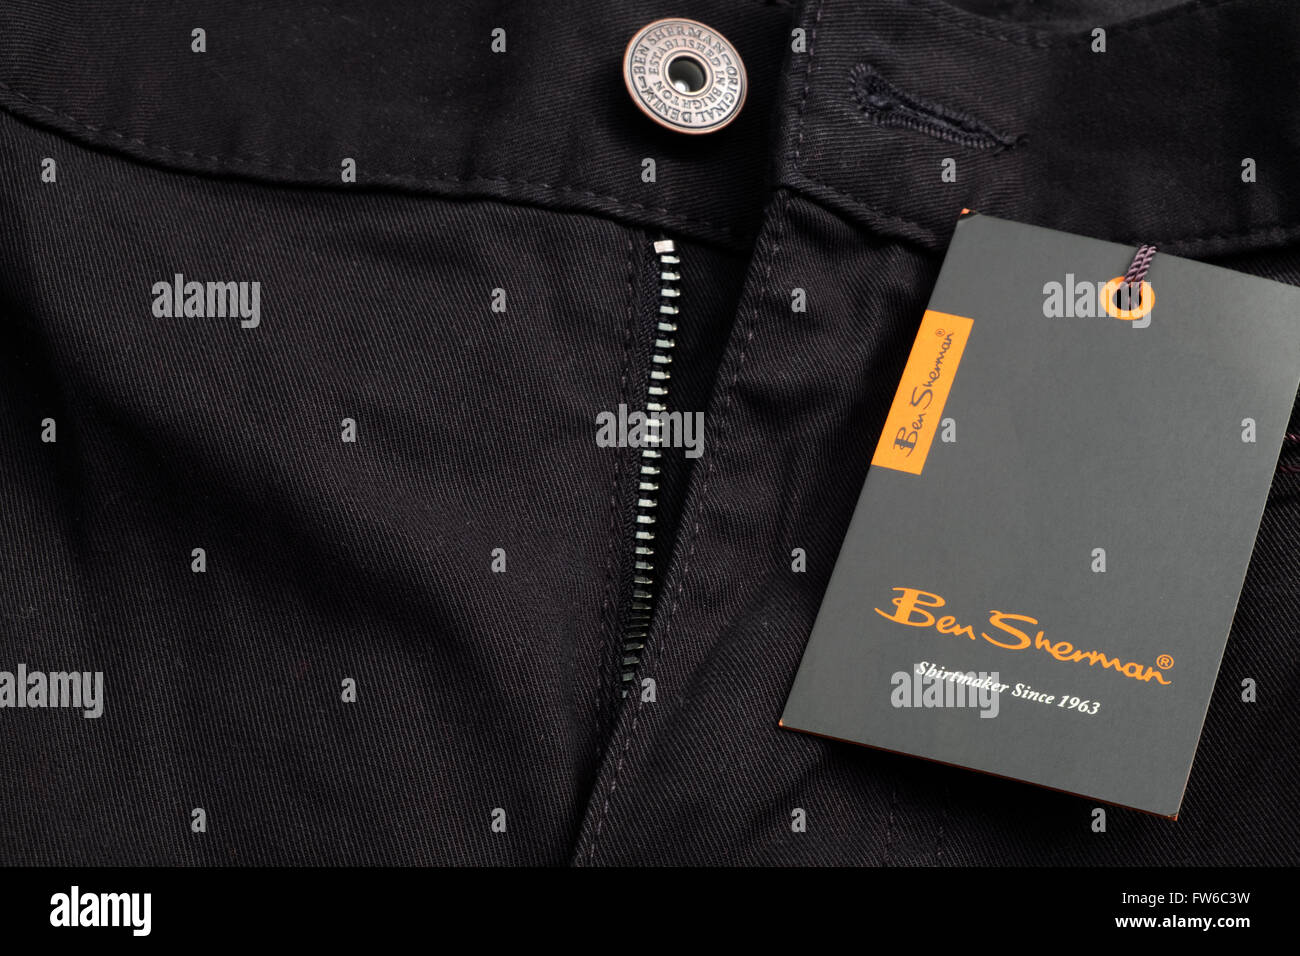 Ben Sherman pantalones mens Fotografía de stock - Alamy